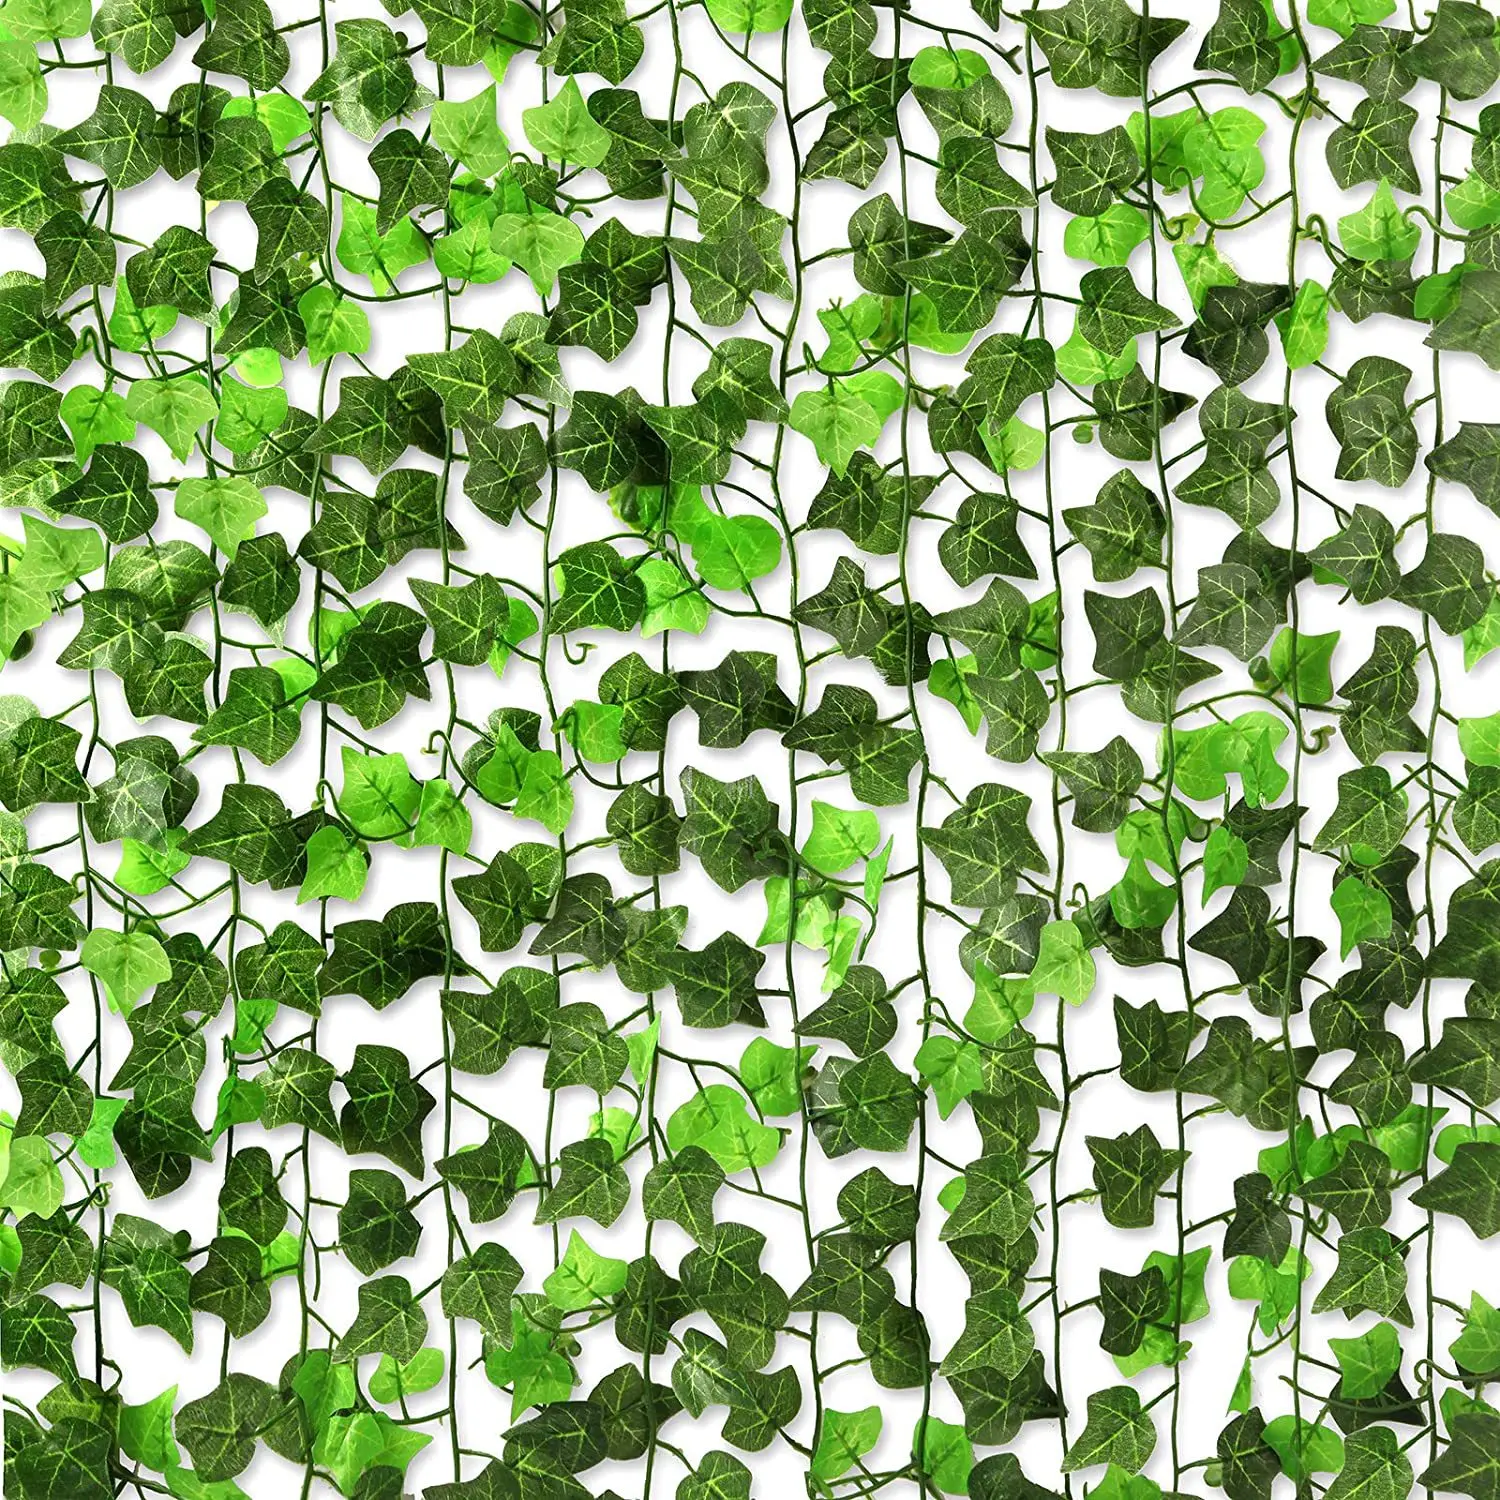 1 piece 2.4M Simulation Green Plant Rattan Wall Hanging Home Decor Artificial Creeper Ivy Leaf Vine Fake Foliage Flowers Wreath